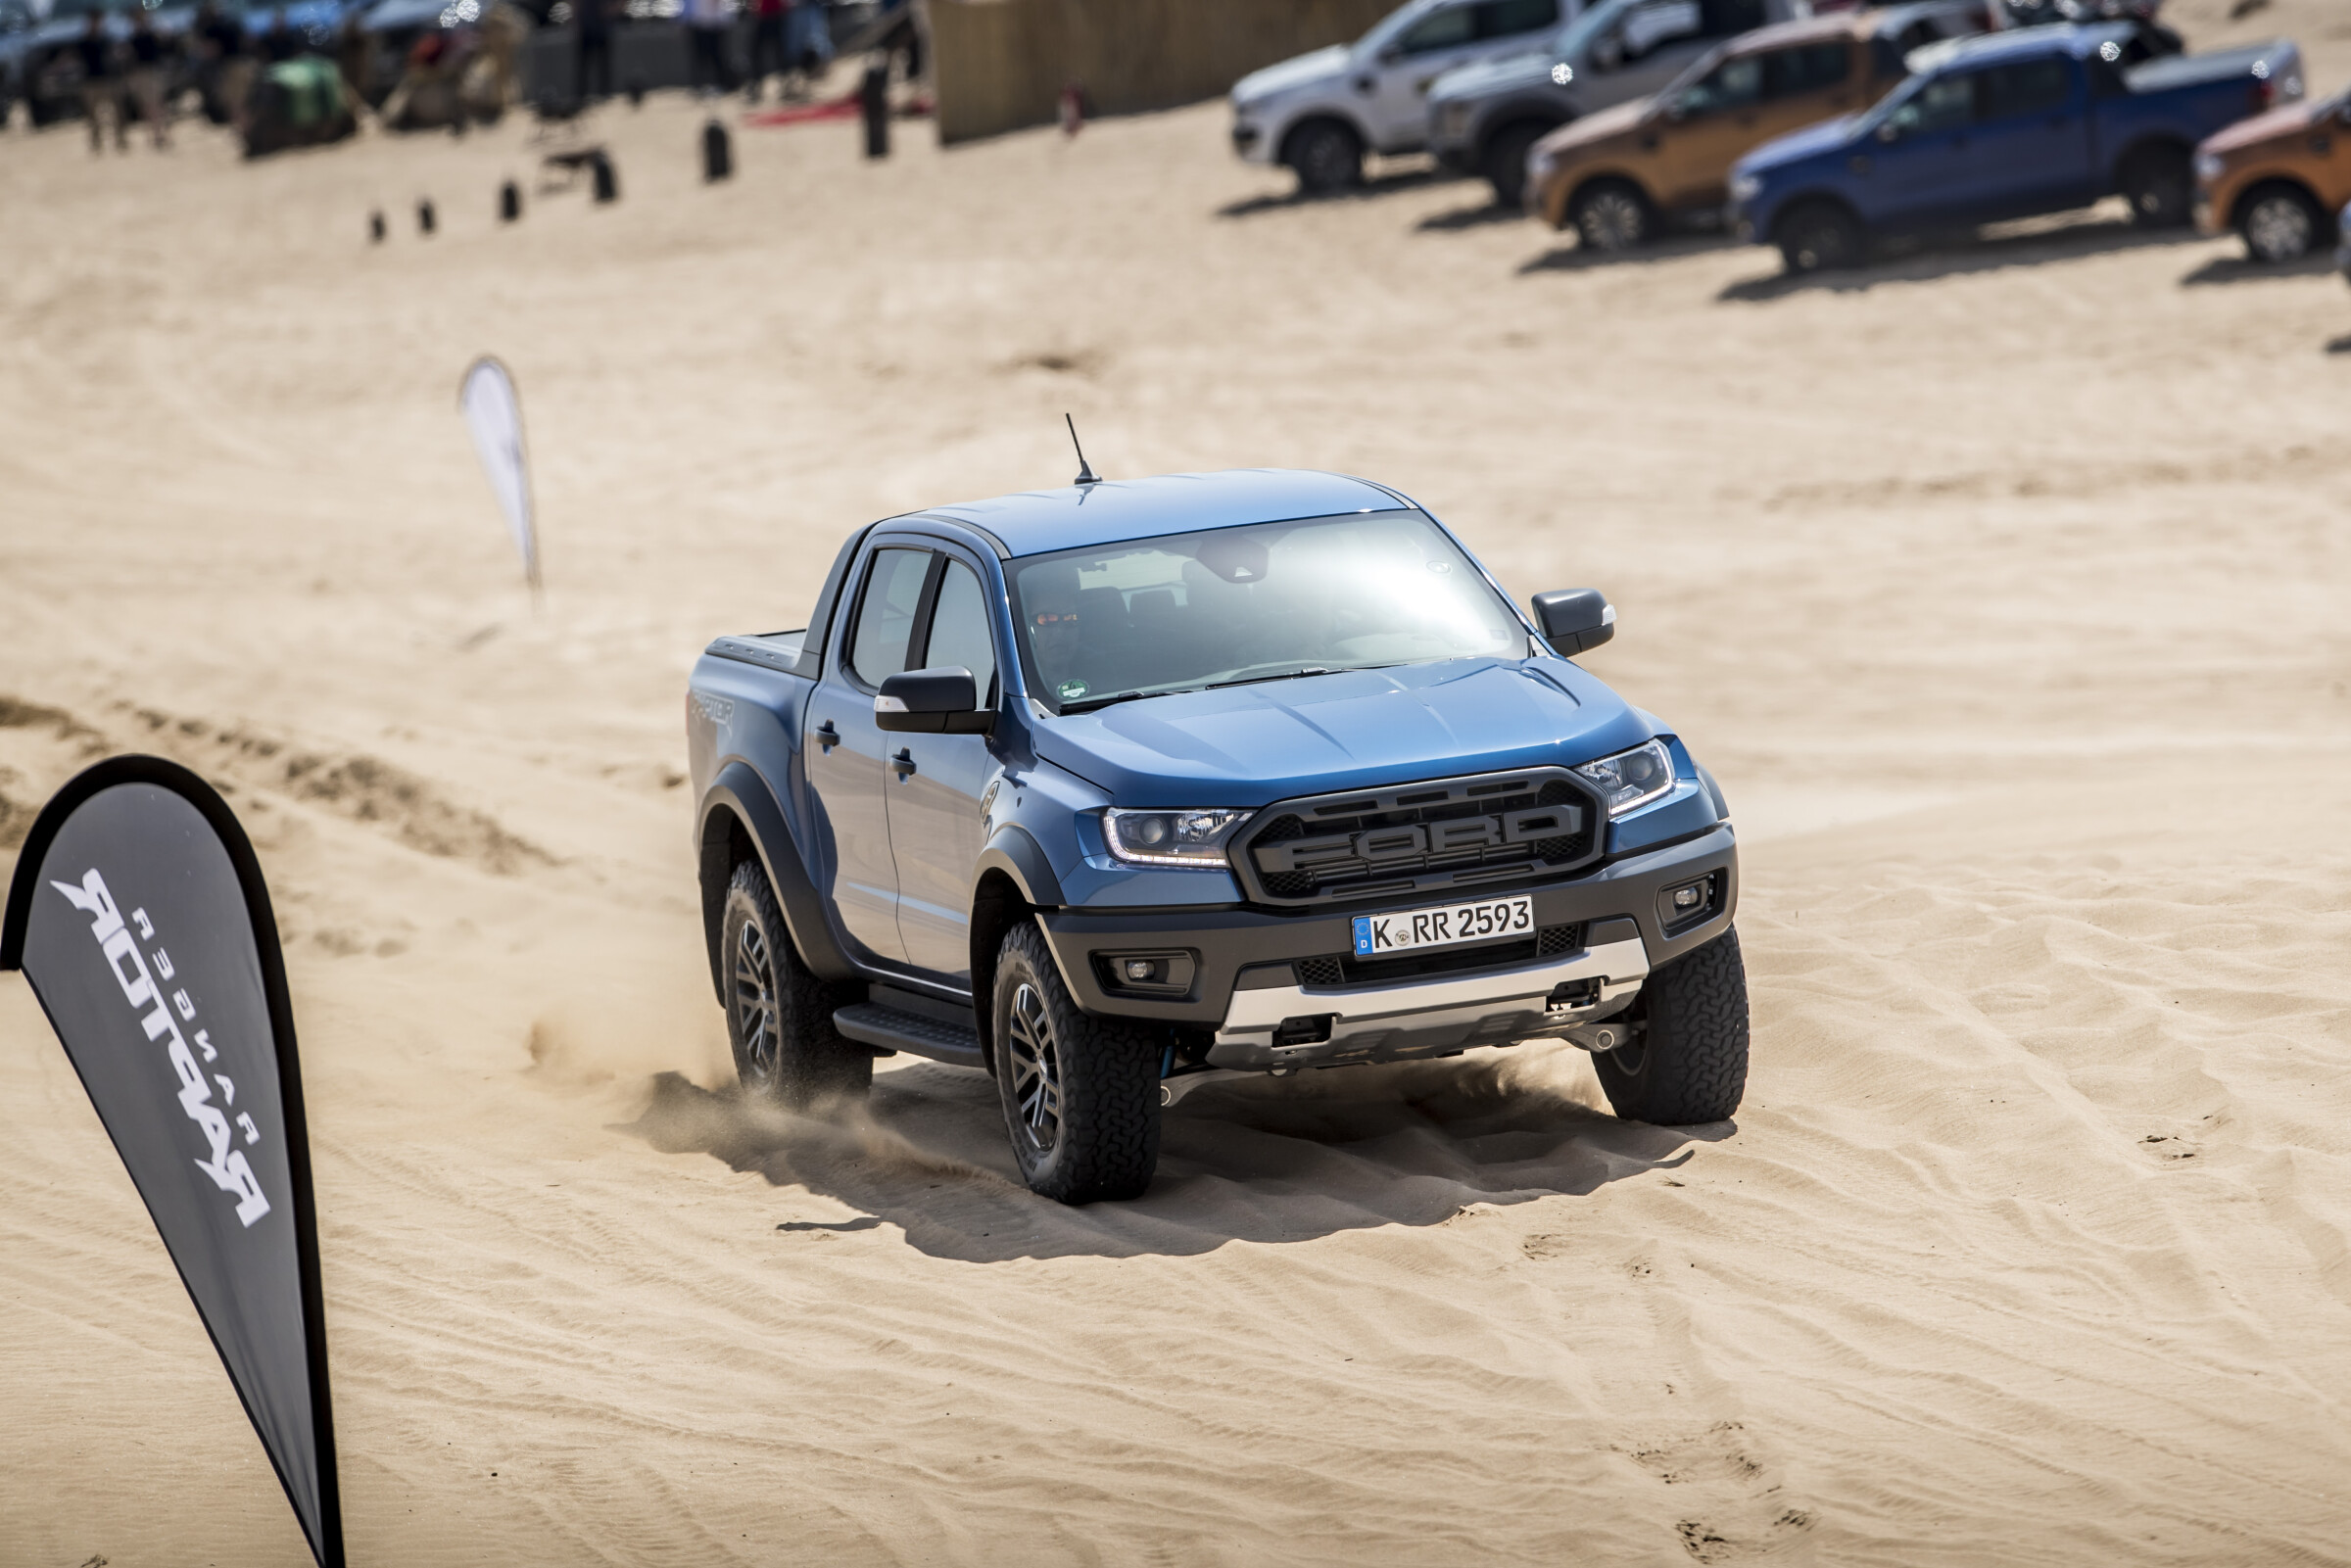 Tv spot for Ford's new Raptor pickup at Ranch de Diabat